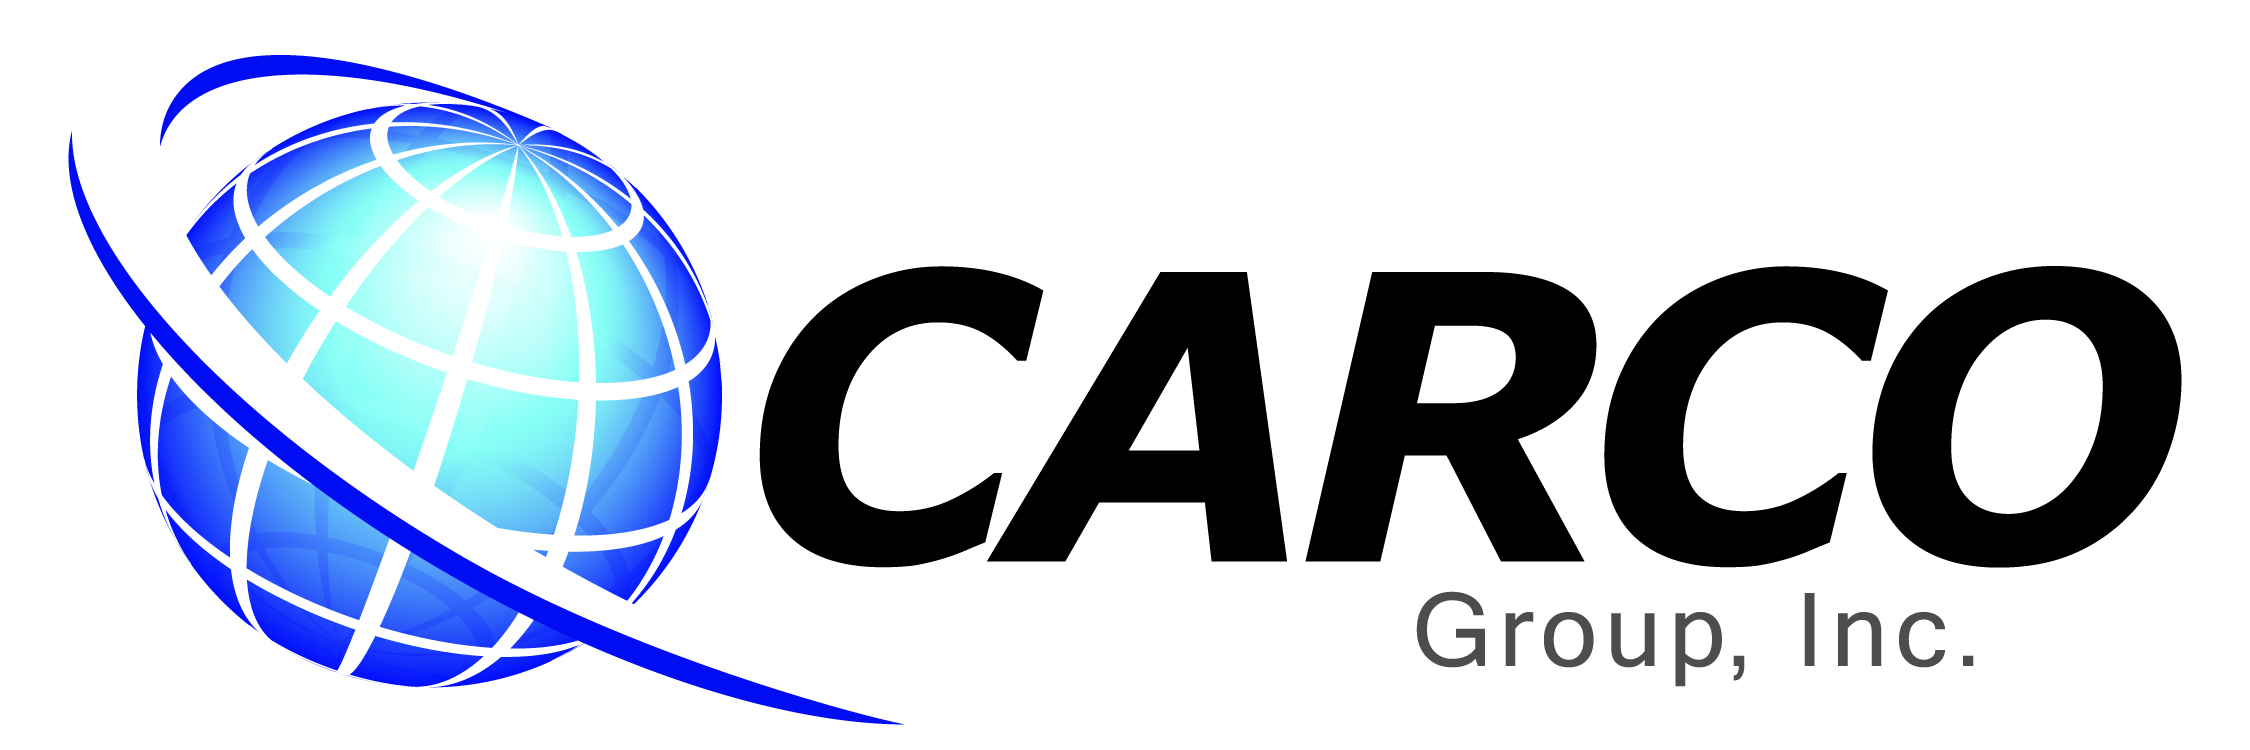 CARCO Group, Inc. Receives Sue Weaver C.A.U.S.E. Certification